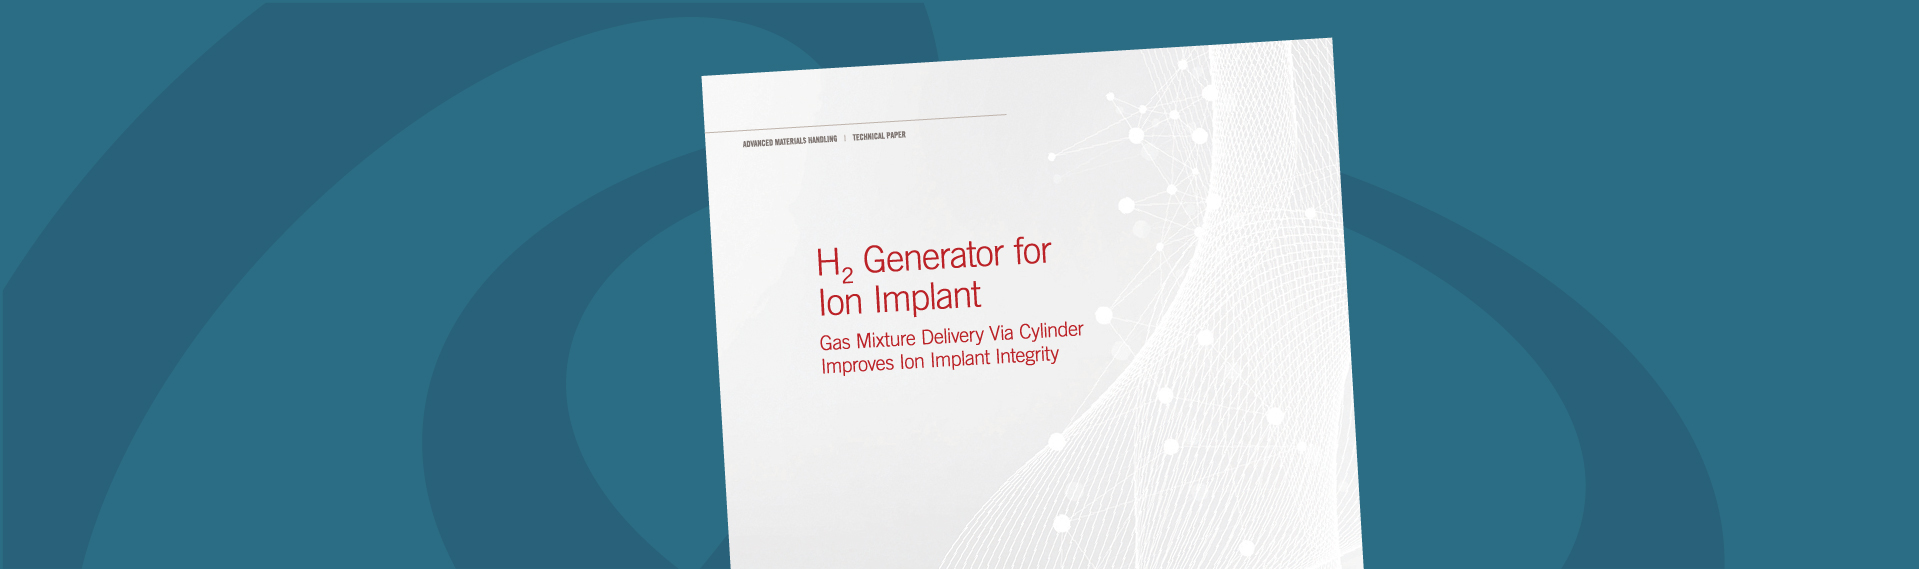 h2-generator-ion-implant-tp-hubspot-13139-desktop-1918x568